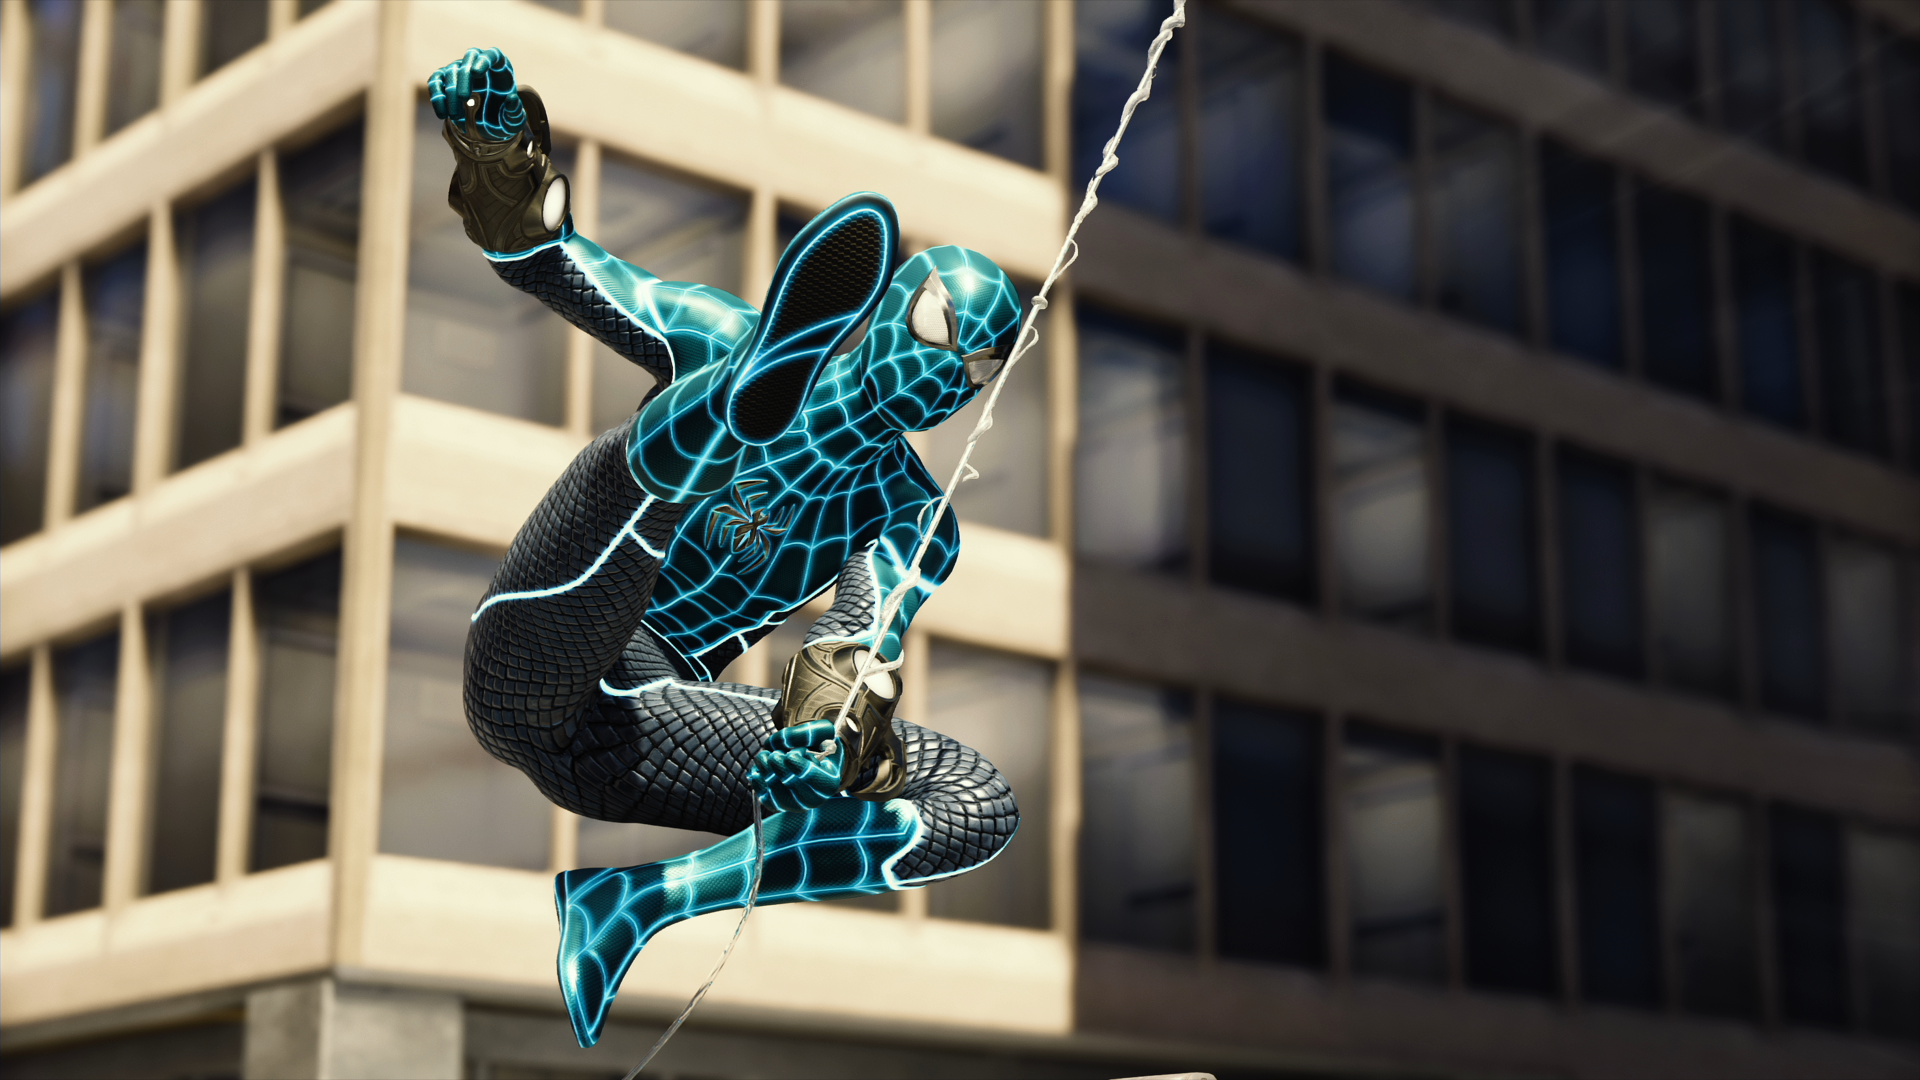 Самого крутого человека паука. Человек паук Fear itself Suit. Marvel Spider man Fear itself Suit. Паутина человека паука.